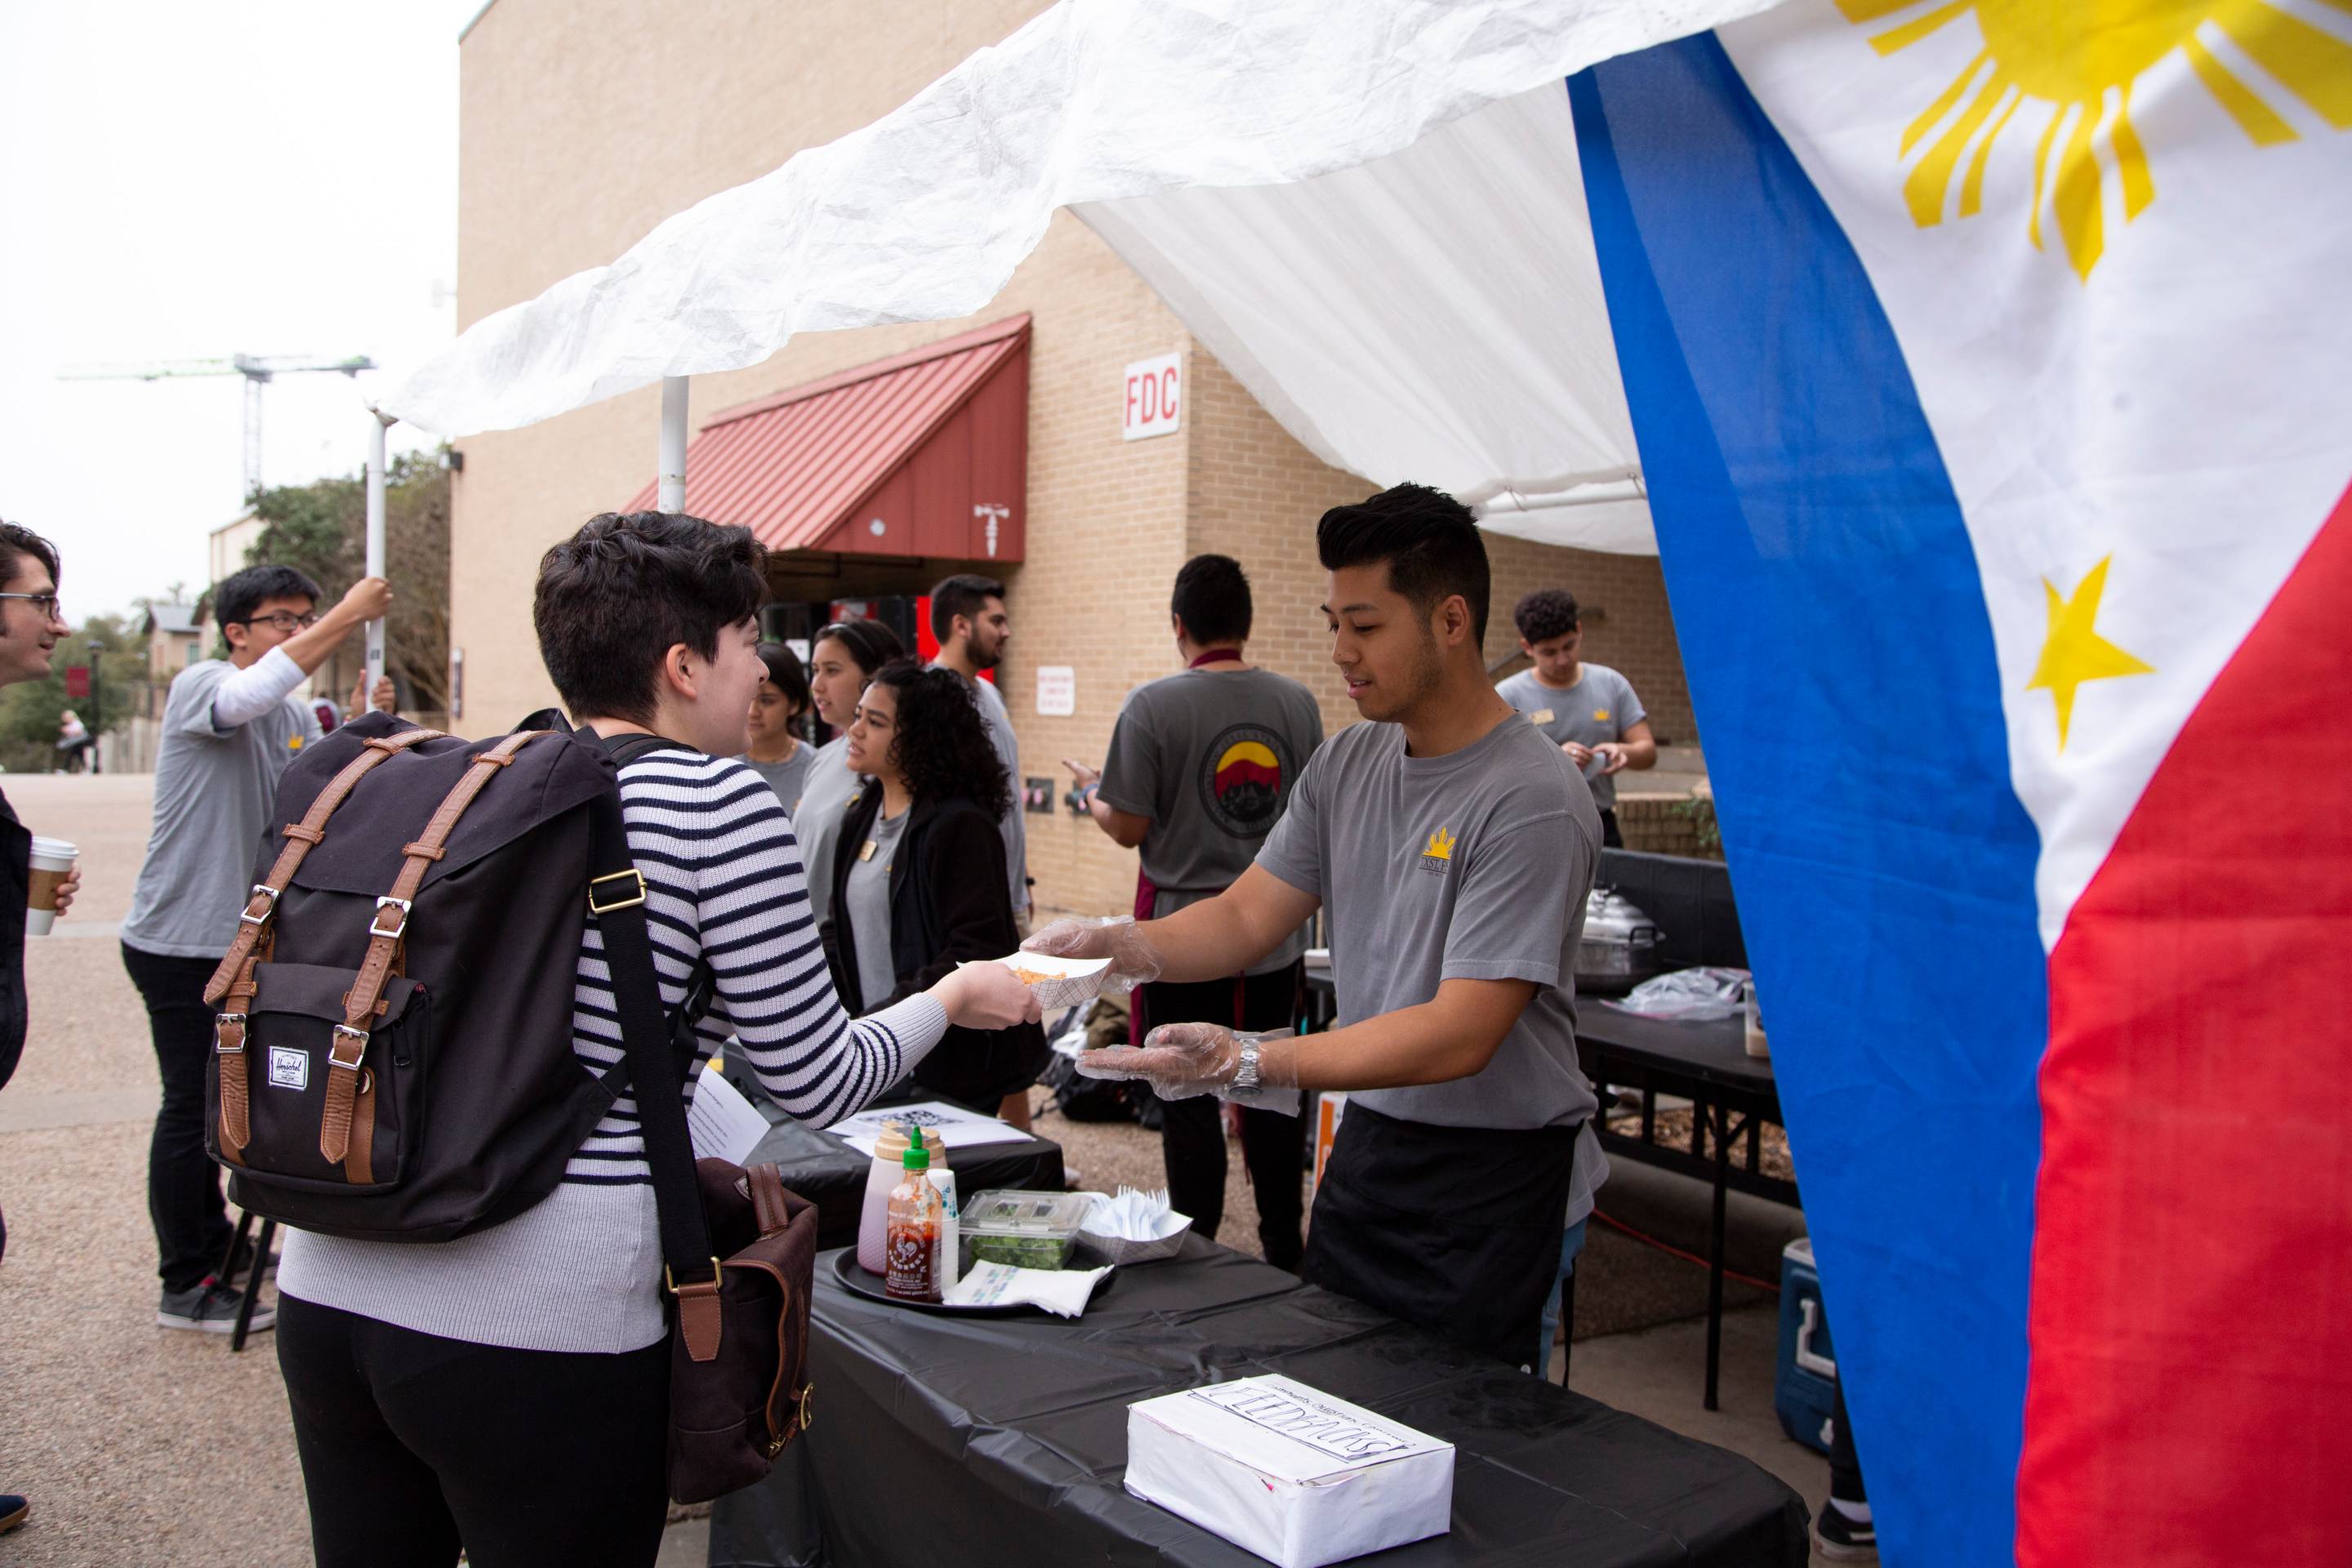 Student organizations selling food